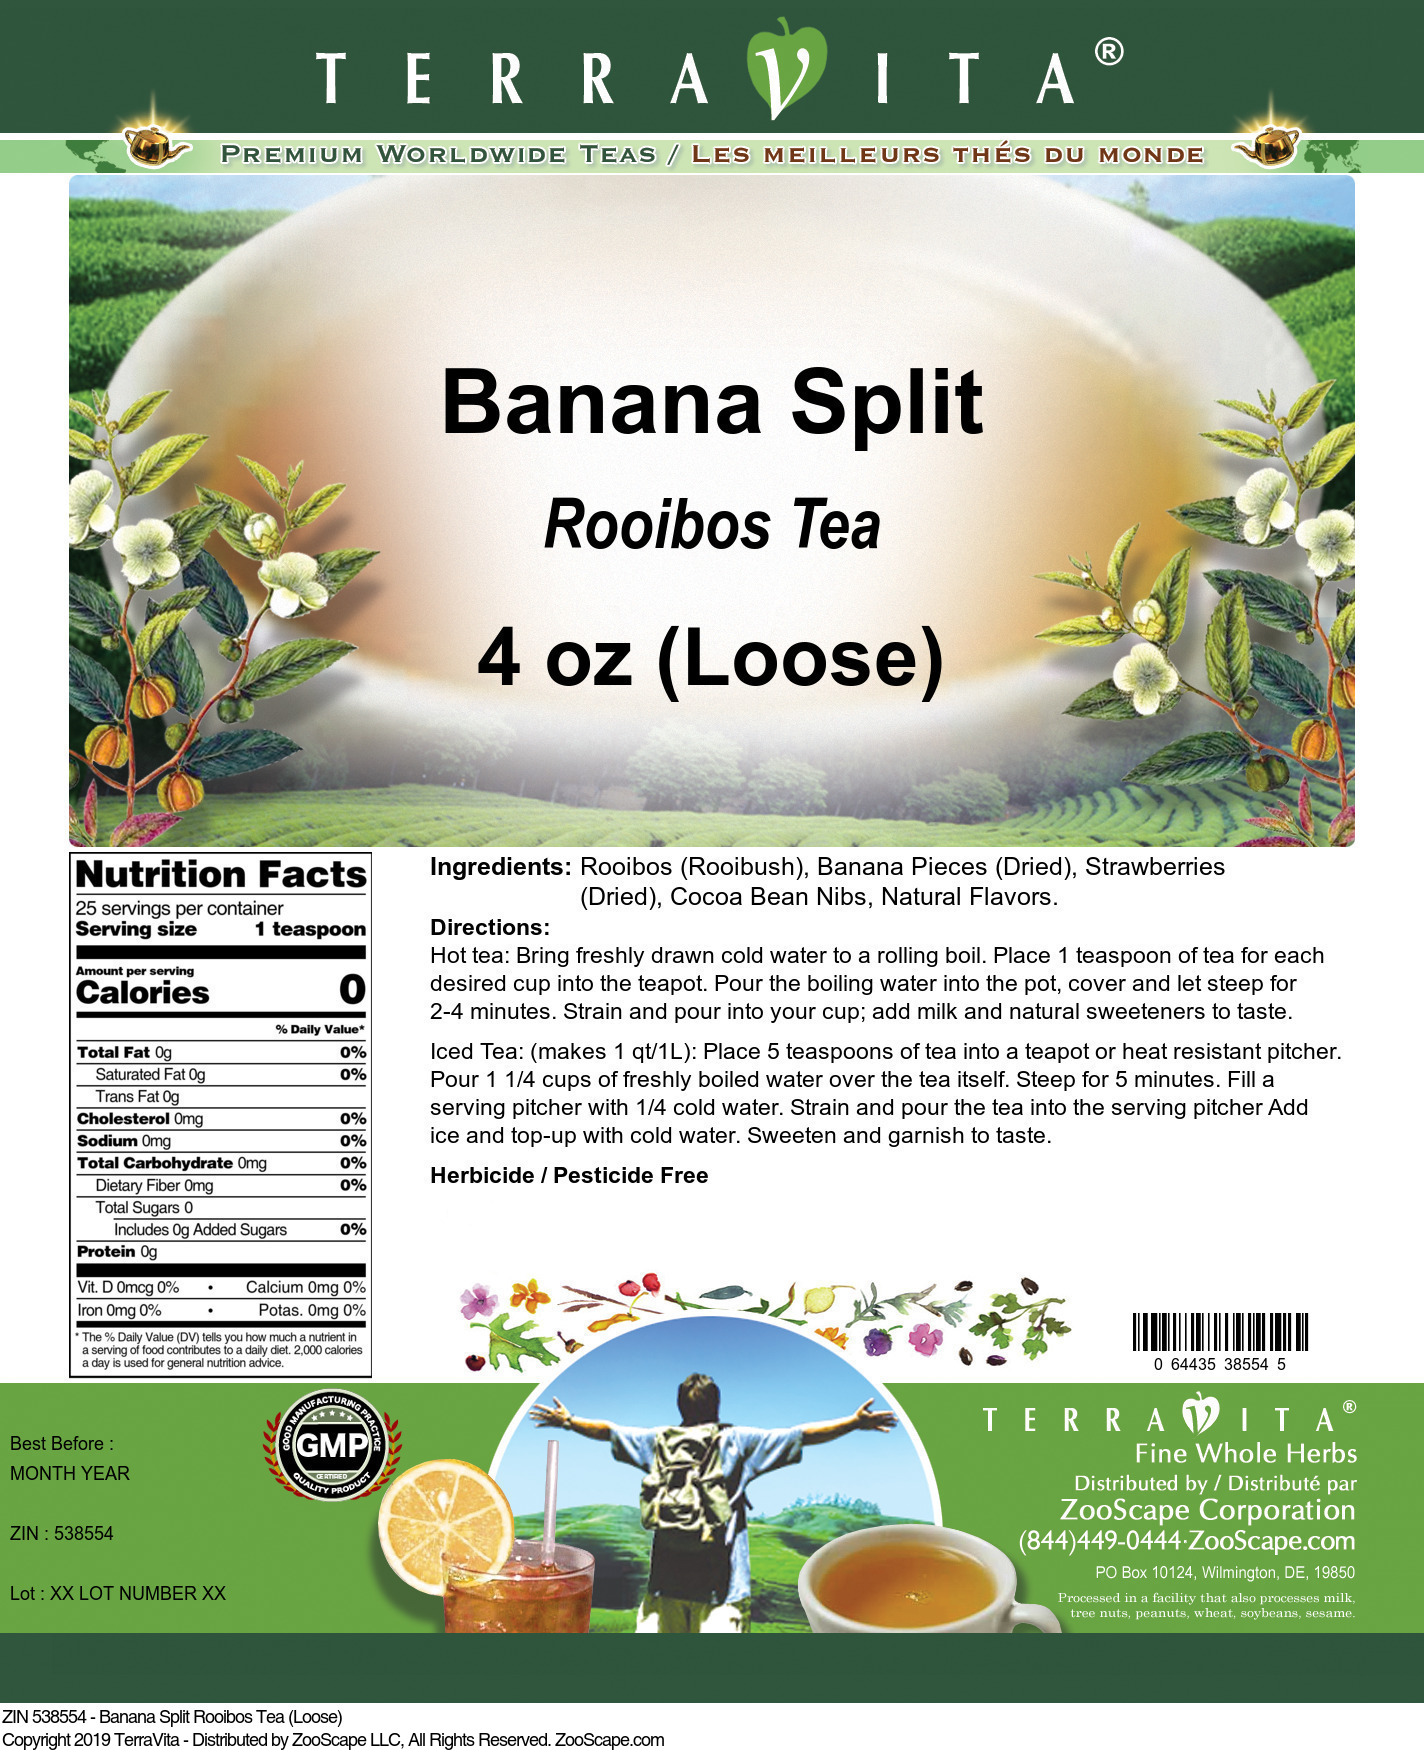 Banana Split Rooibos Tea (Loose) - Label